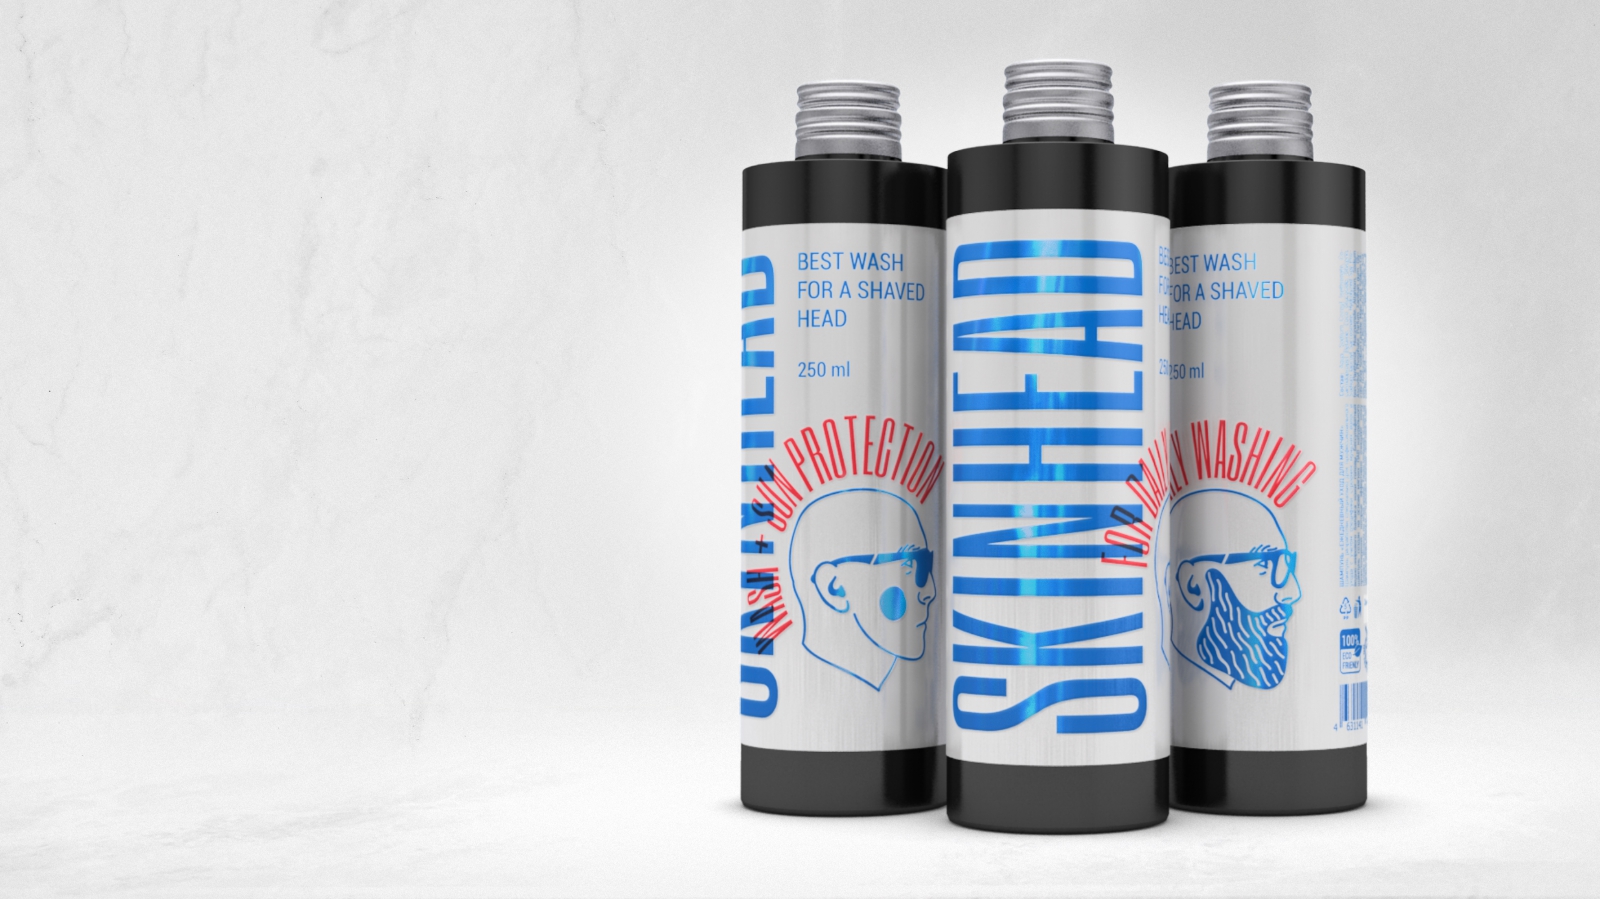 SkinHead shampoo packaging design